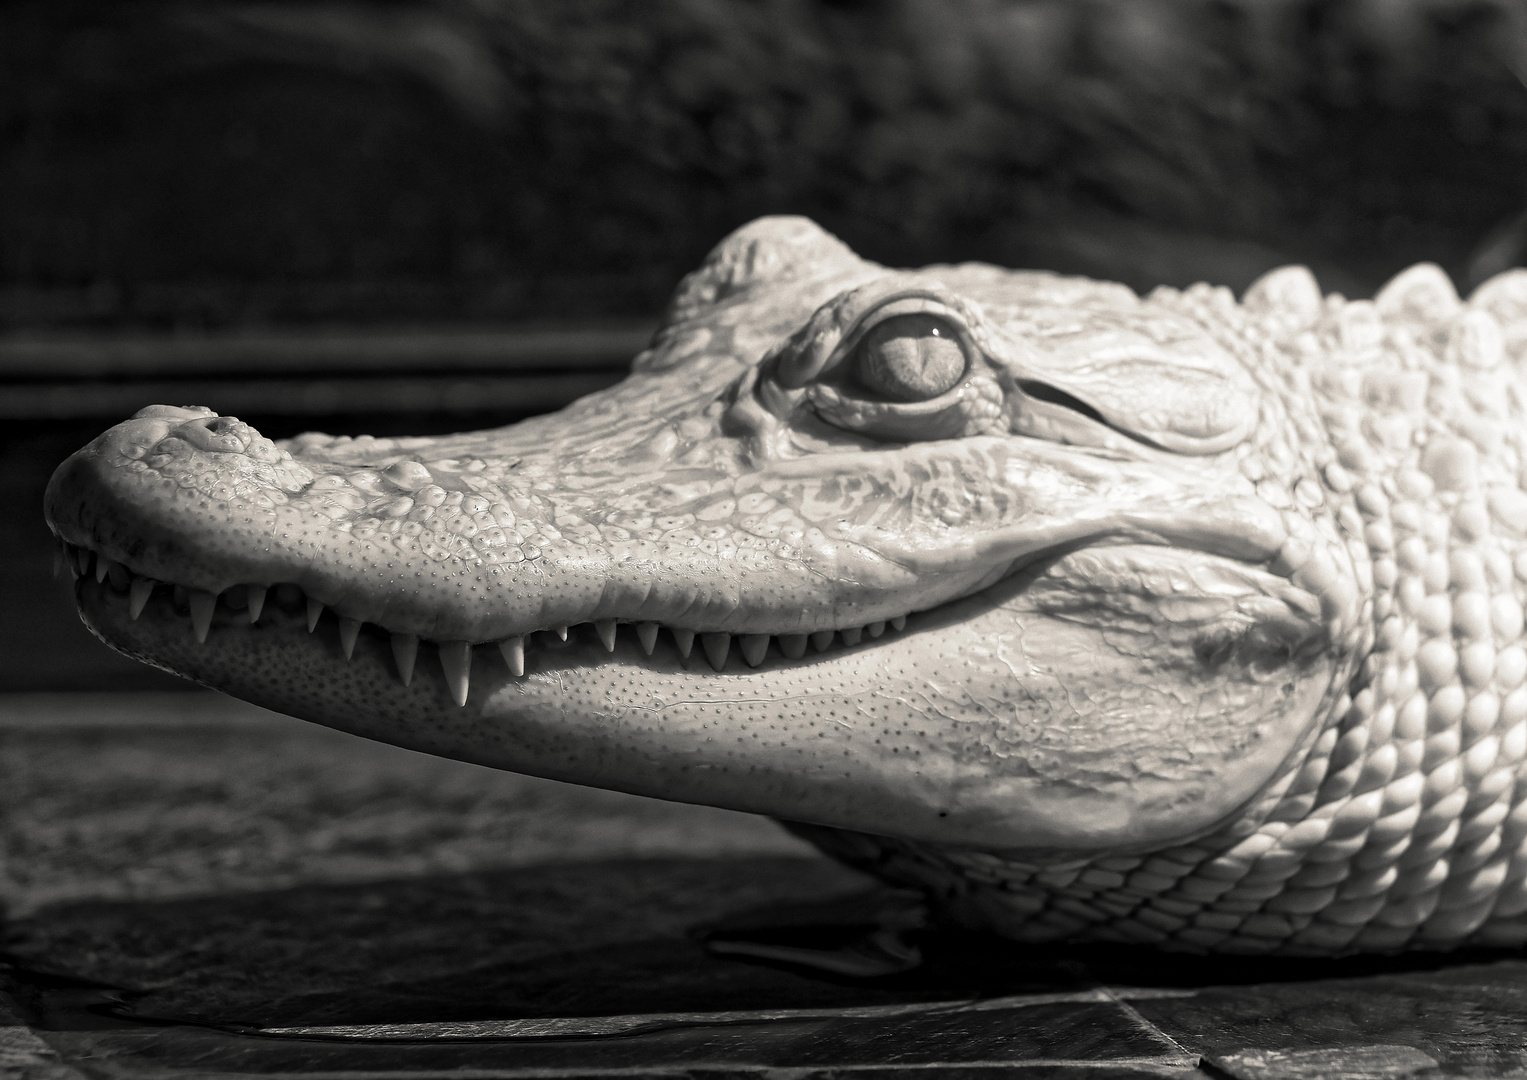 Mississippi Alligator (Albino)